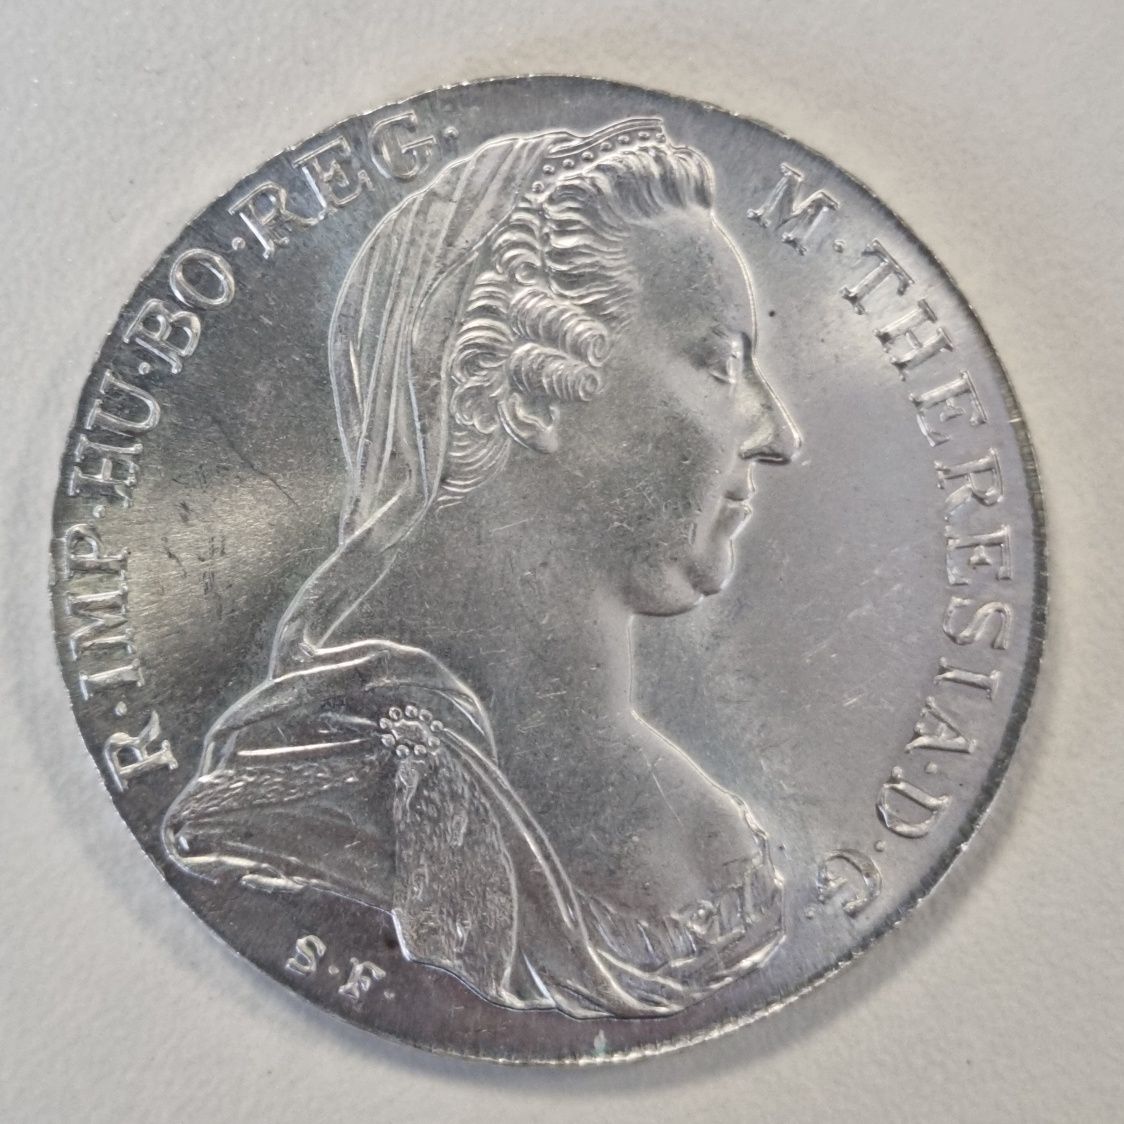 1 taler austriac din argint - Maria Theresia - 1780